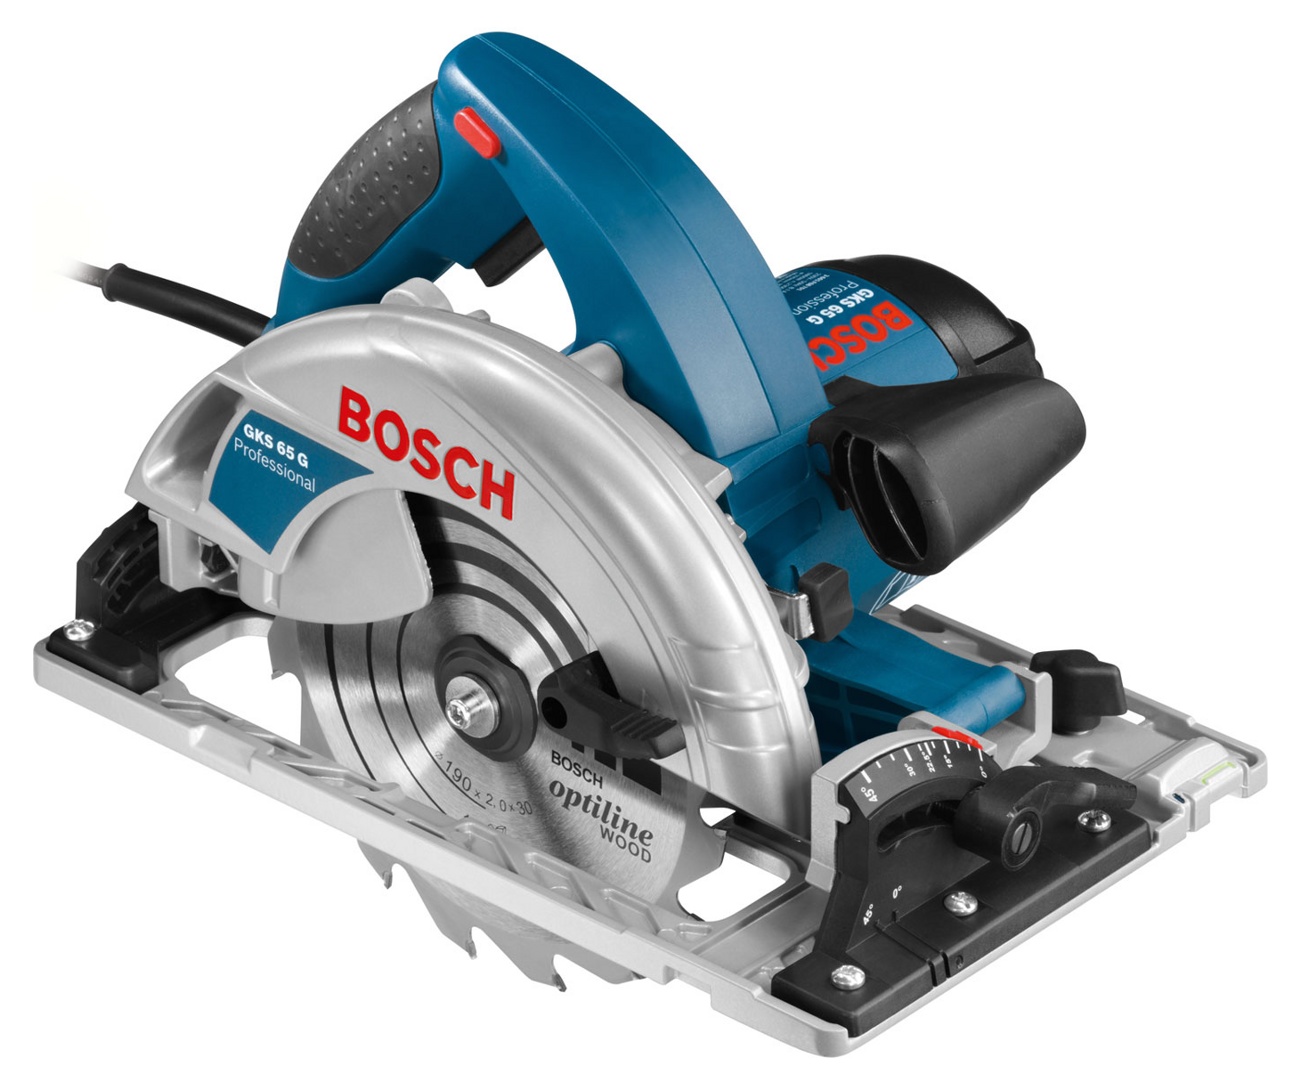   Bosch GKS 65 G Professional 0601668903